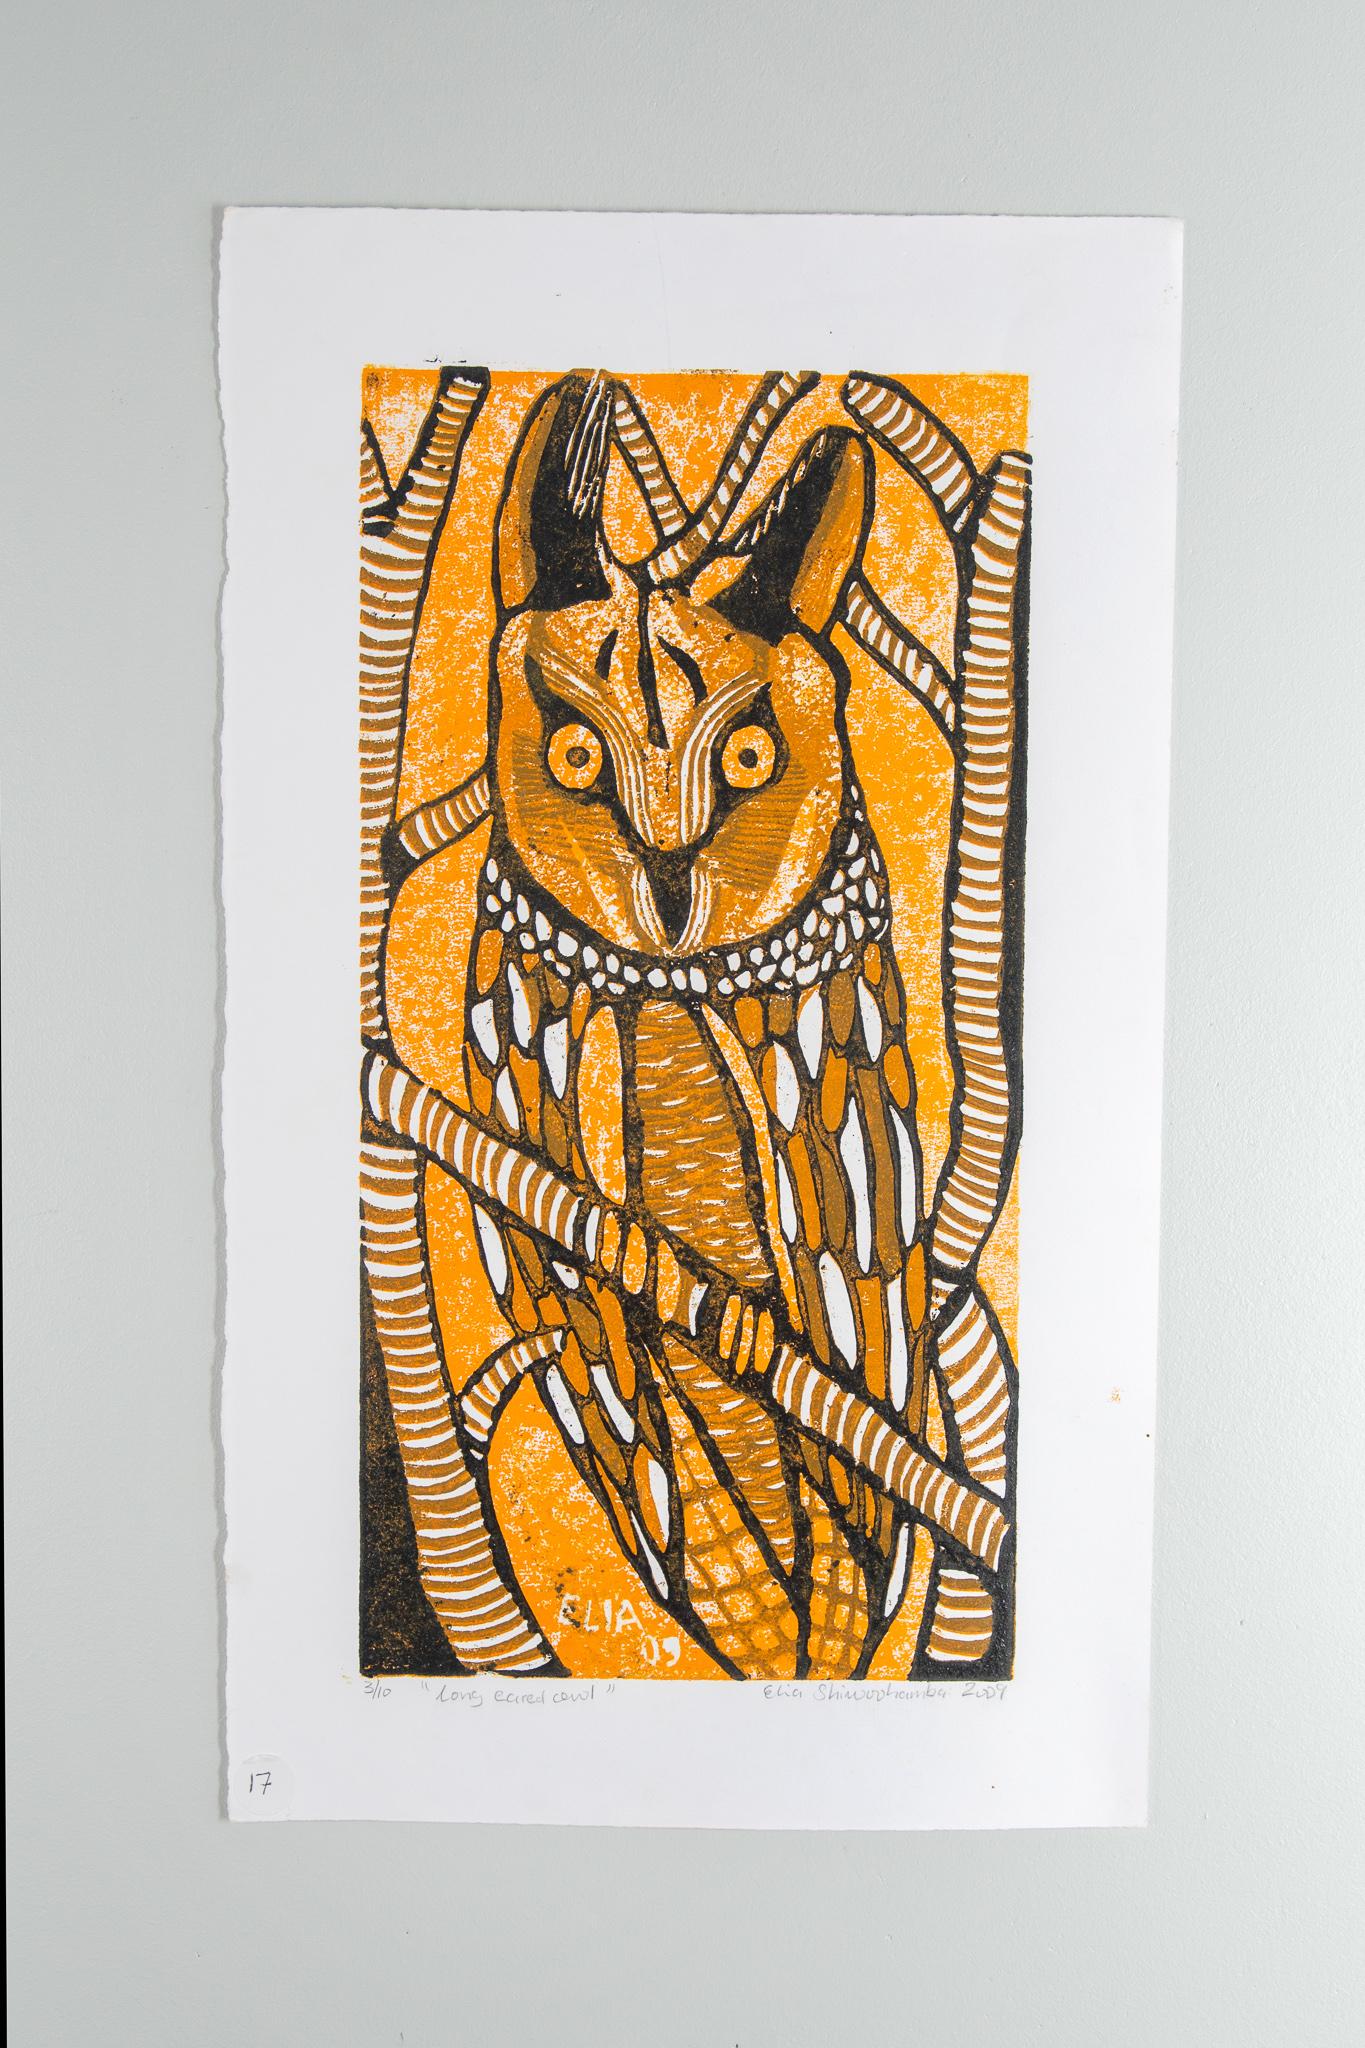 Long hibou chevronné, Elia Shiwoohamba, impression de carton sur papier